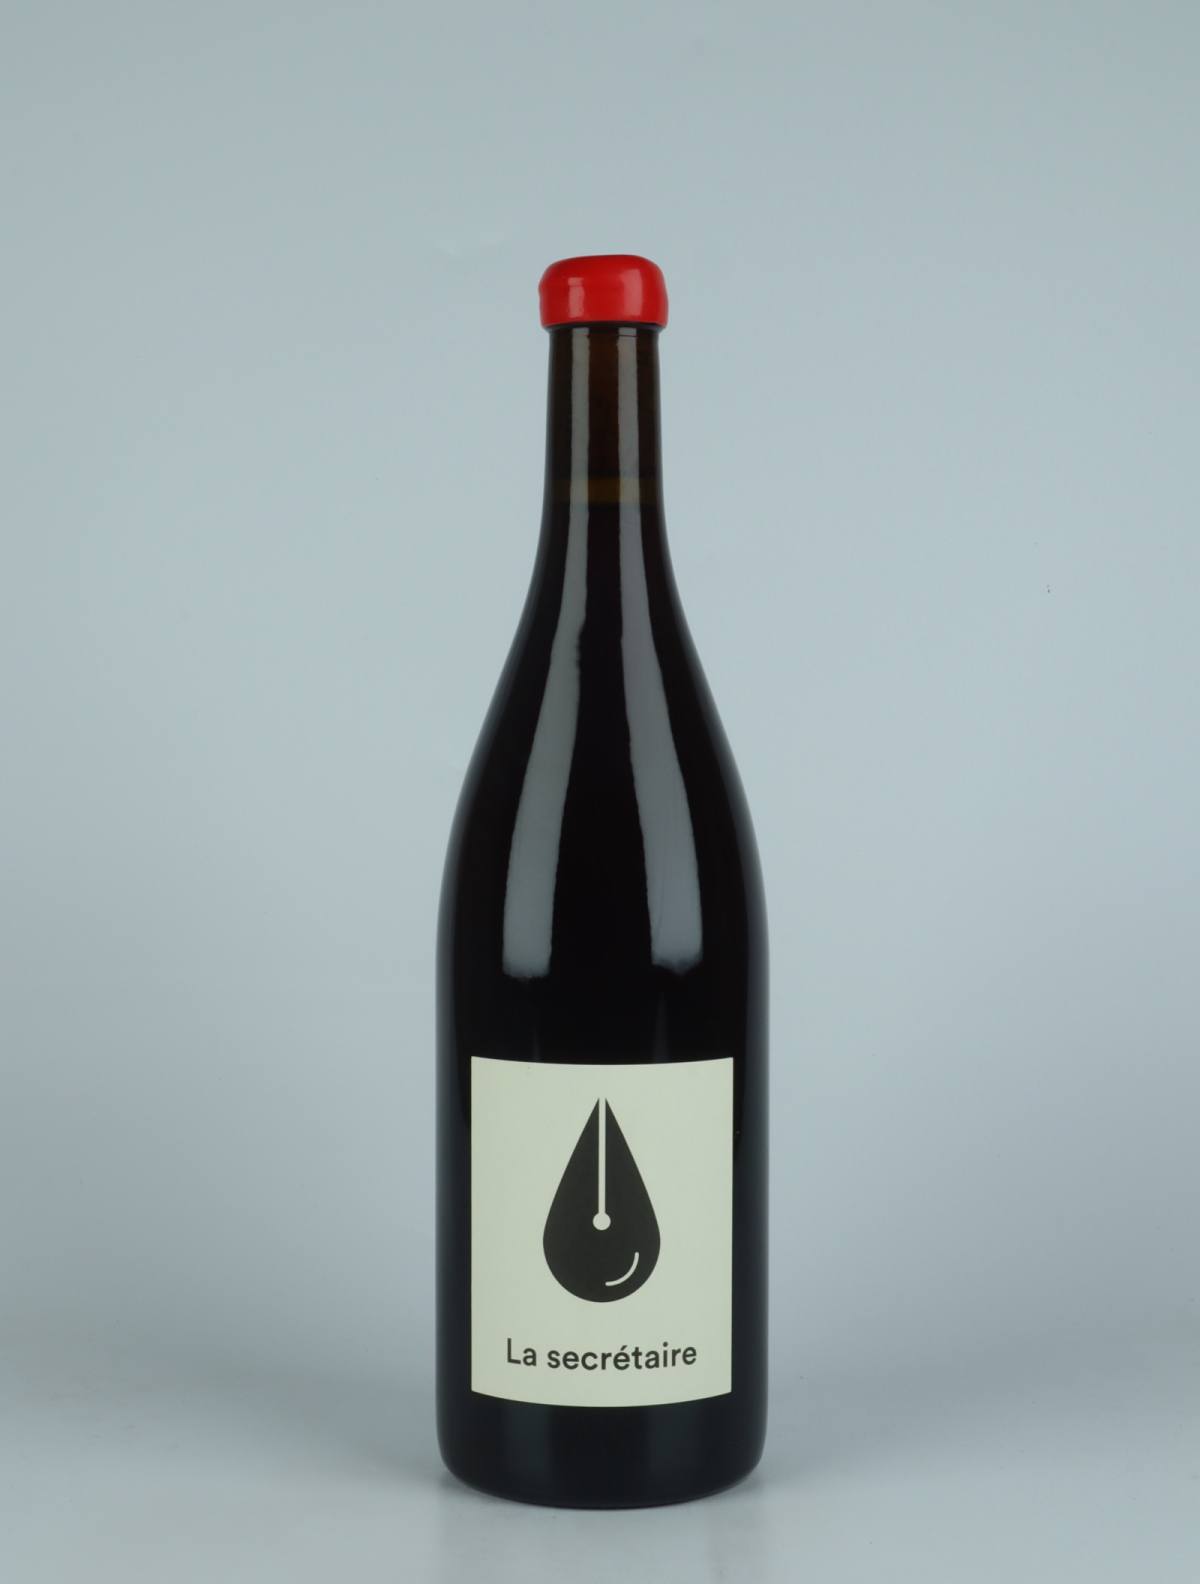 A bottle 2019 La Secrétaire Red wine from The Office, Loire in France